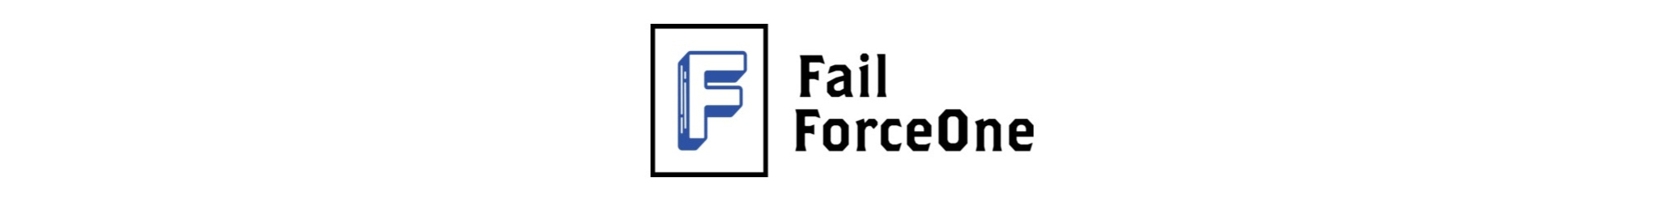  Fail Force One